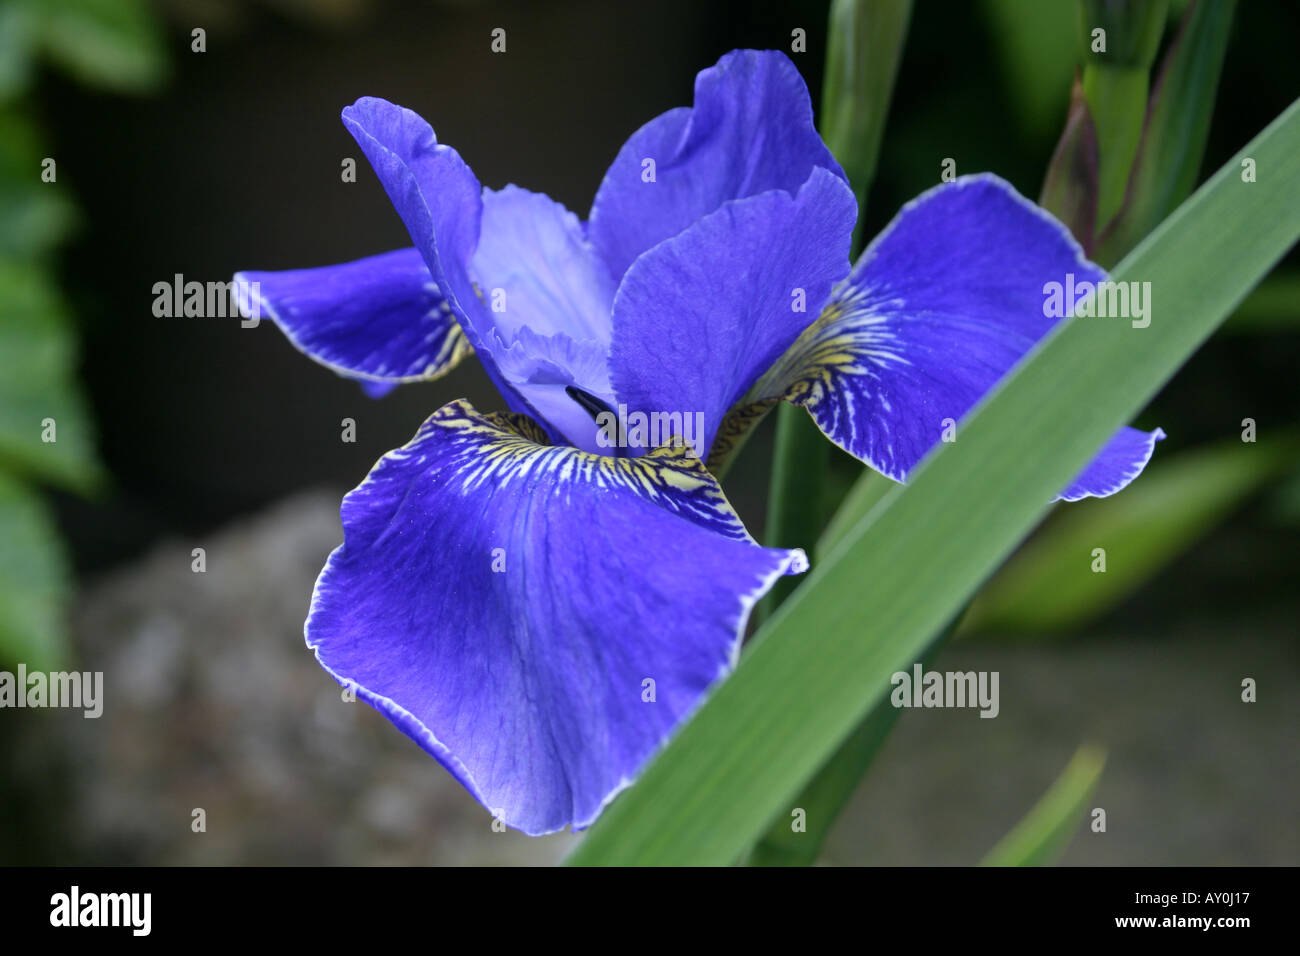 Blue flowers of garden plant Iris sibirica Silver Edge Stock Photo